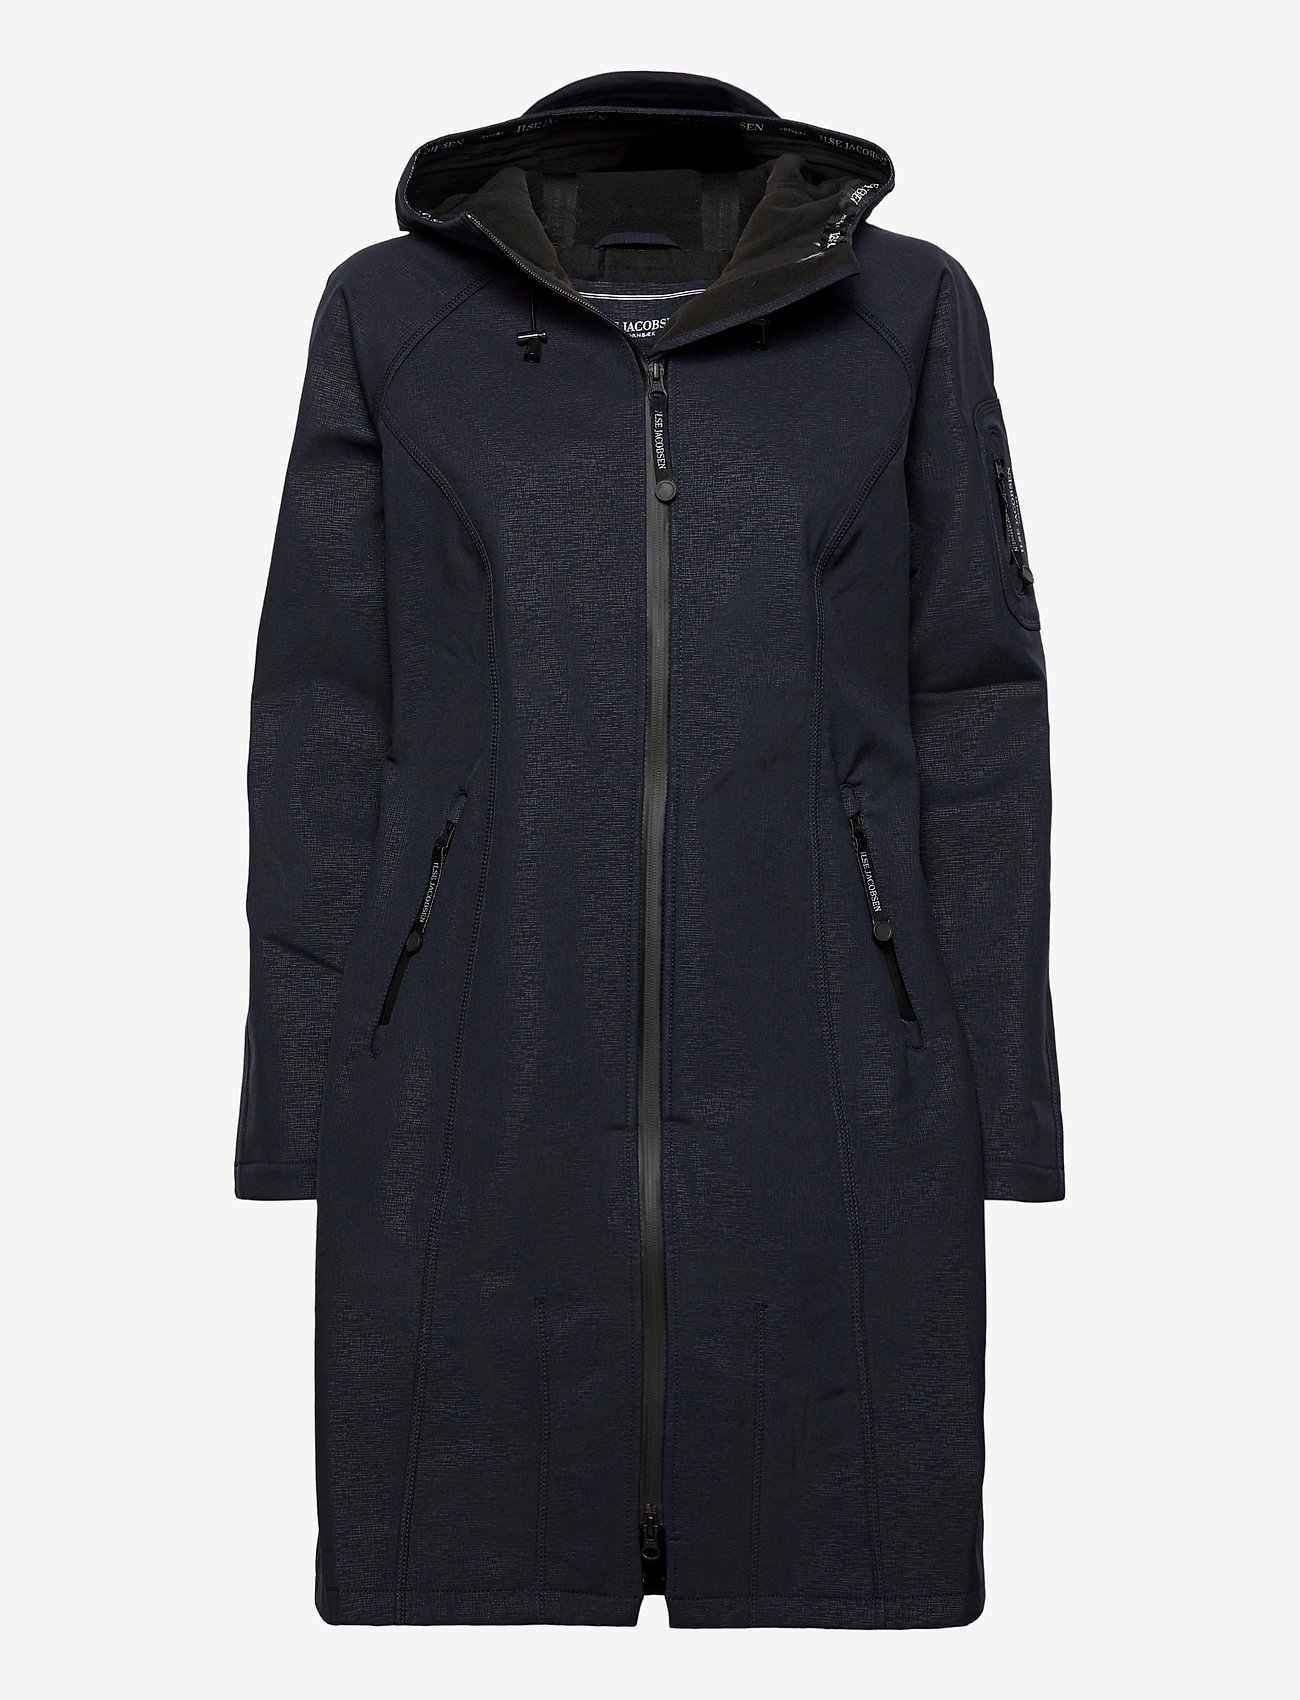 Ilse Jacobsen - Long raincoat - regnjakker - dark indigo - 0